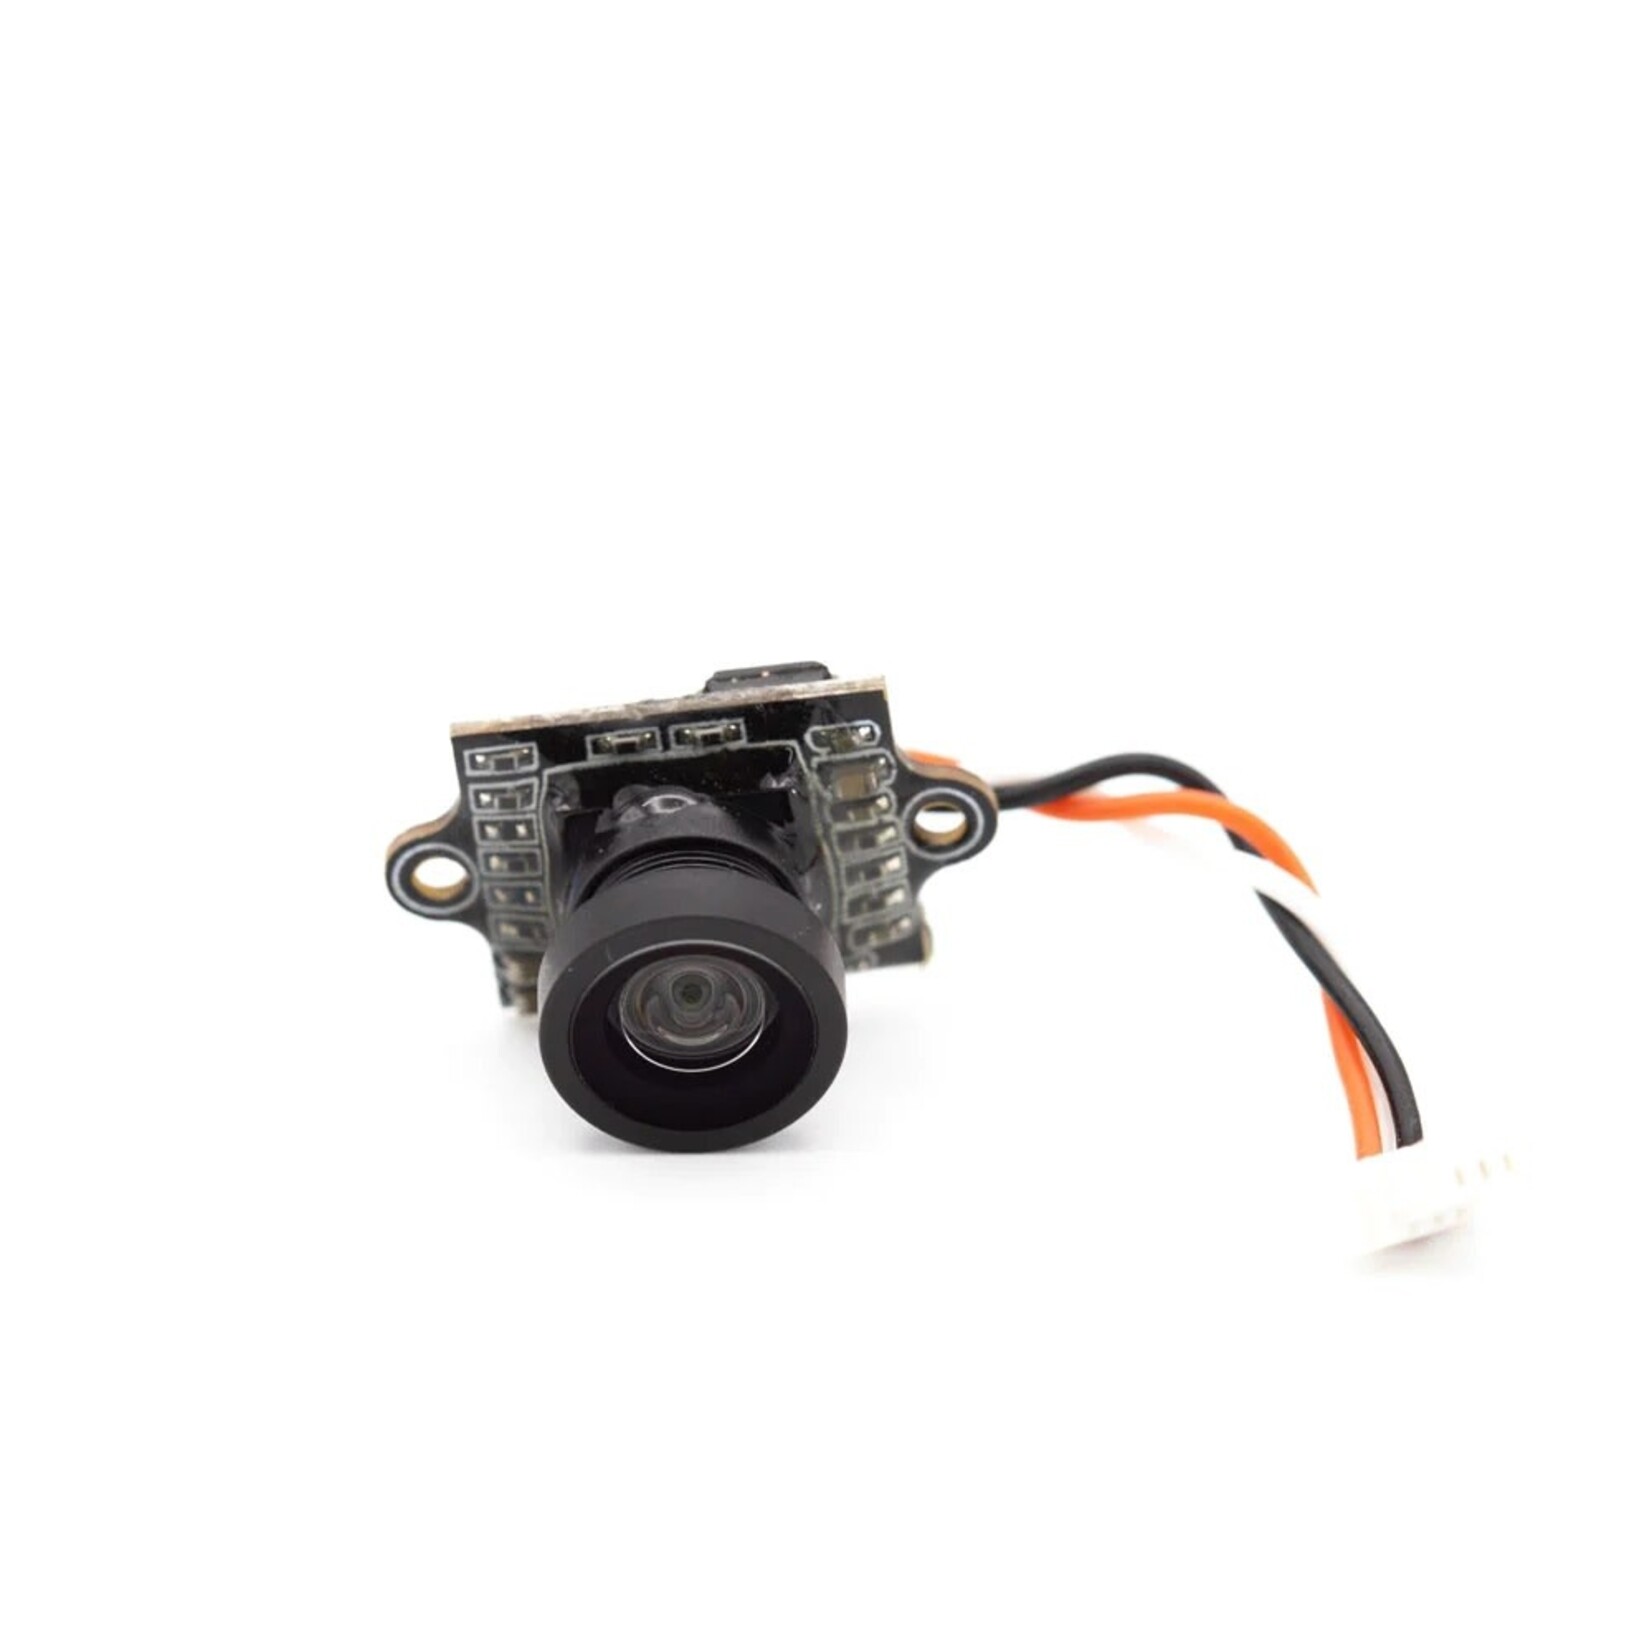 EMAX Emax Tinyhawk S Indoor FPV Racing Drone Spare Part FPV Camera 600TVL CMOS #0110003030